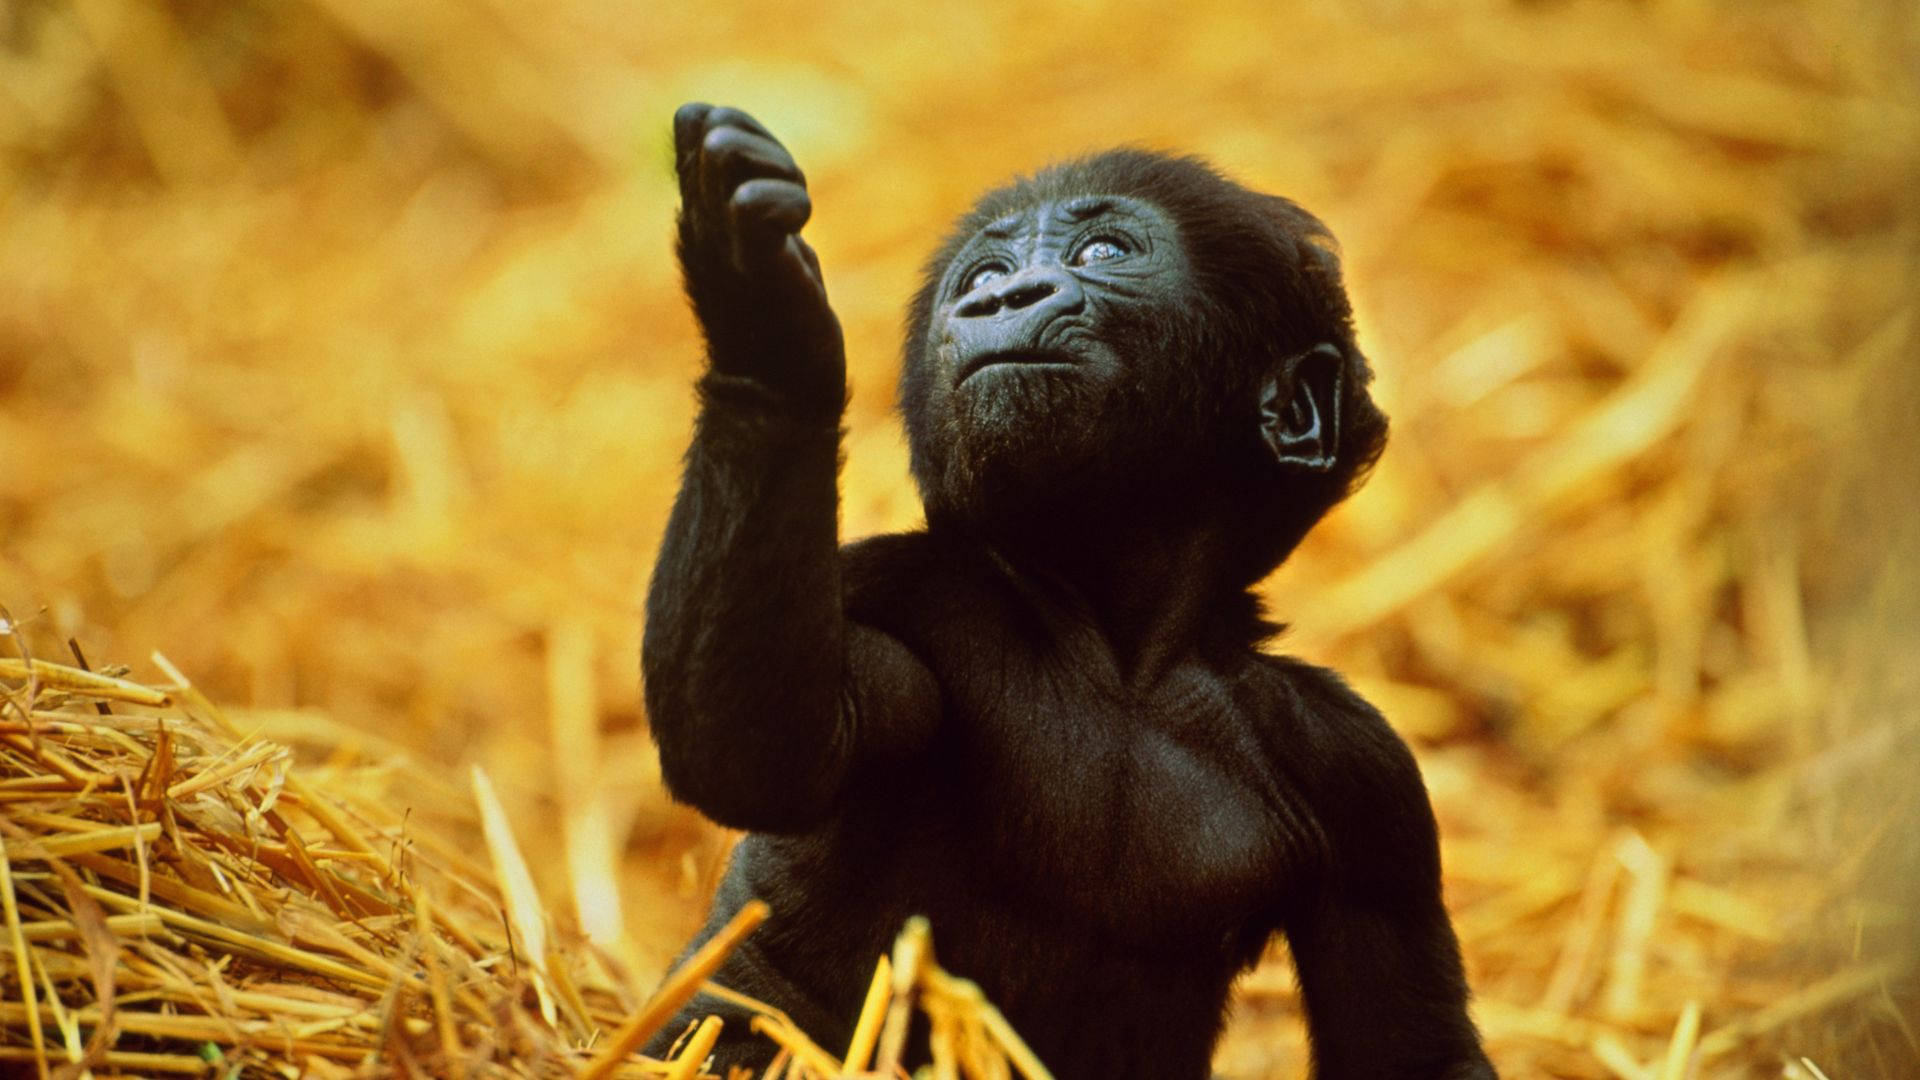 Enjoy your desktop with this peaceful Gorilla! Wallpaper